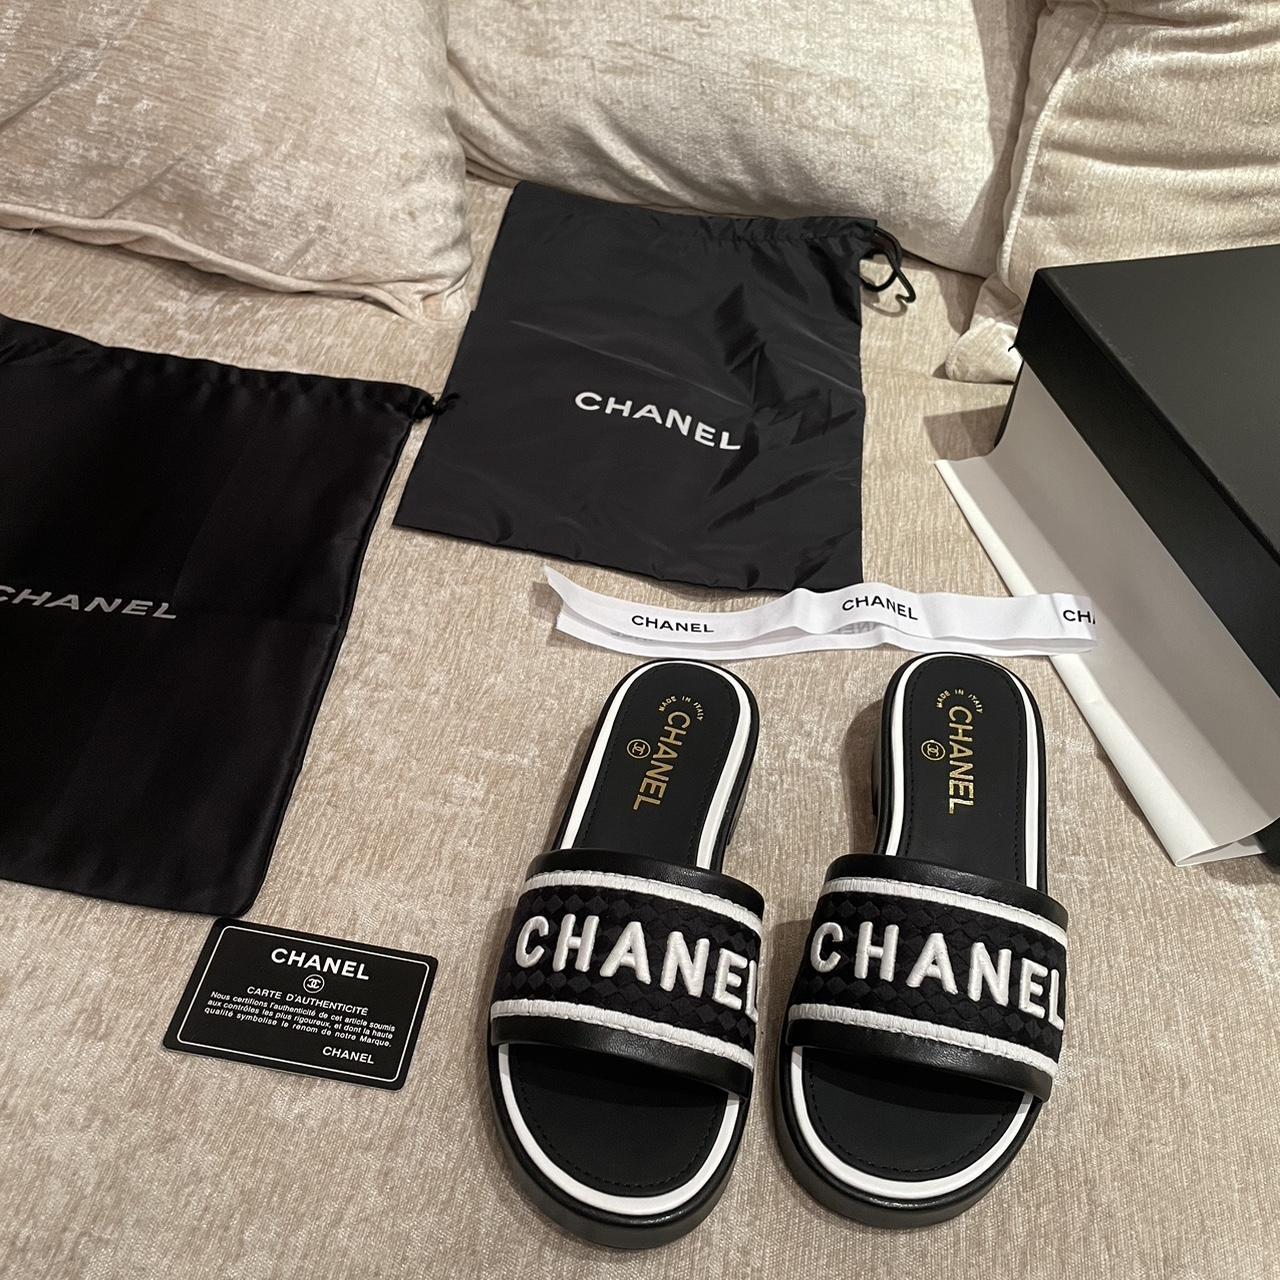 Chanel LAMBSKIN embroidered logo Sandals Size 38 -... - Depop